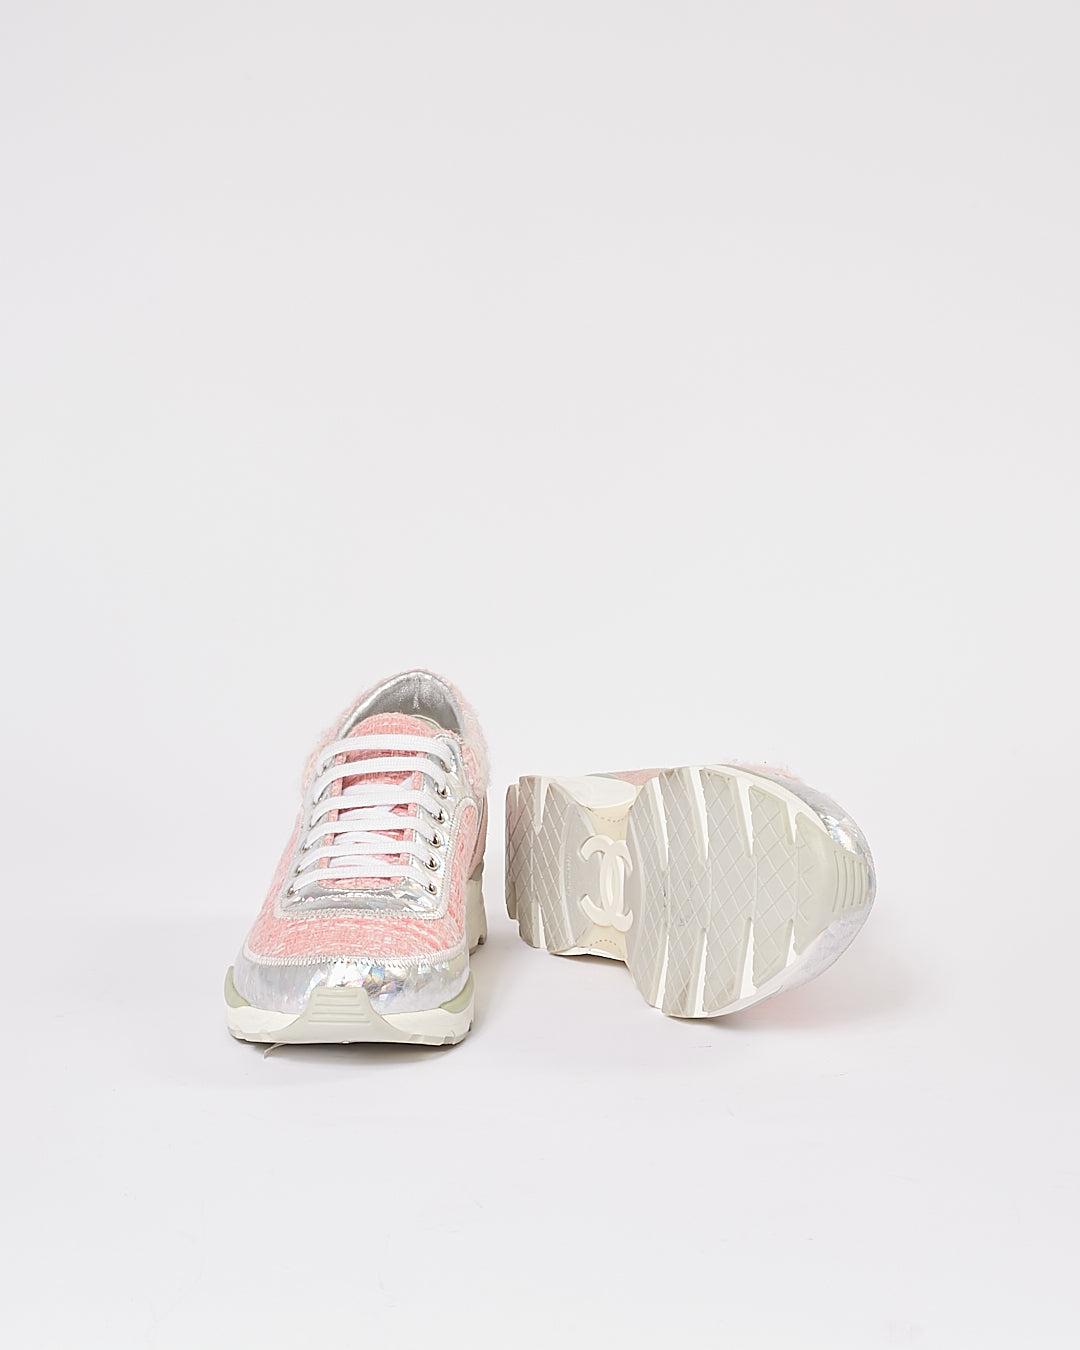 Chanel Pink Tweed Metallic Sneakers - 36.5